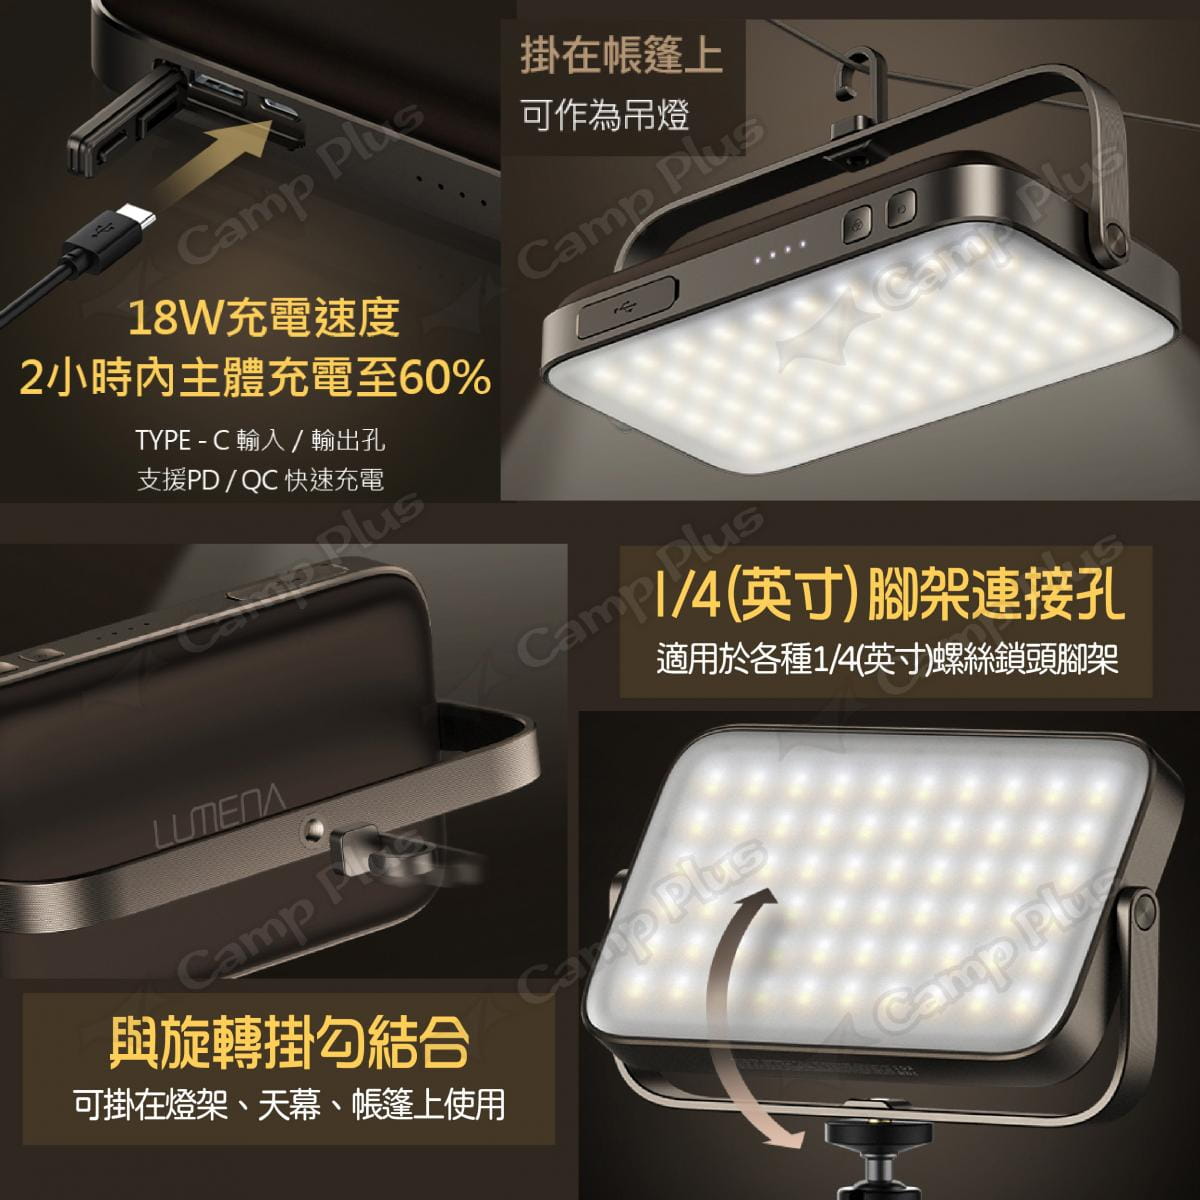 【N9 LUMENA】PLUS2 行動電源照明LED燈 (悠遊戶外) 4